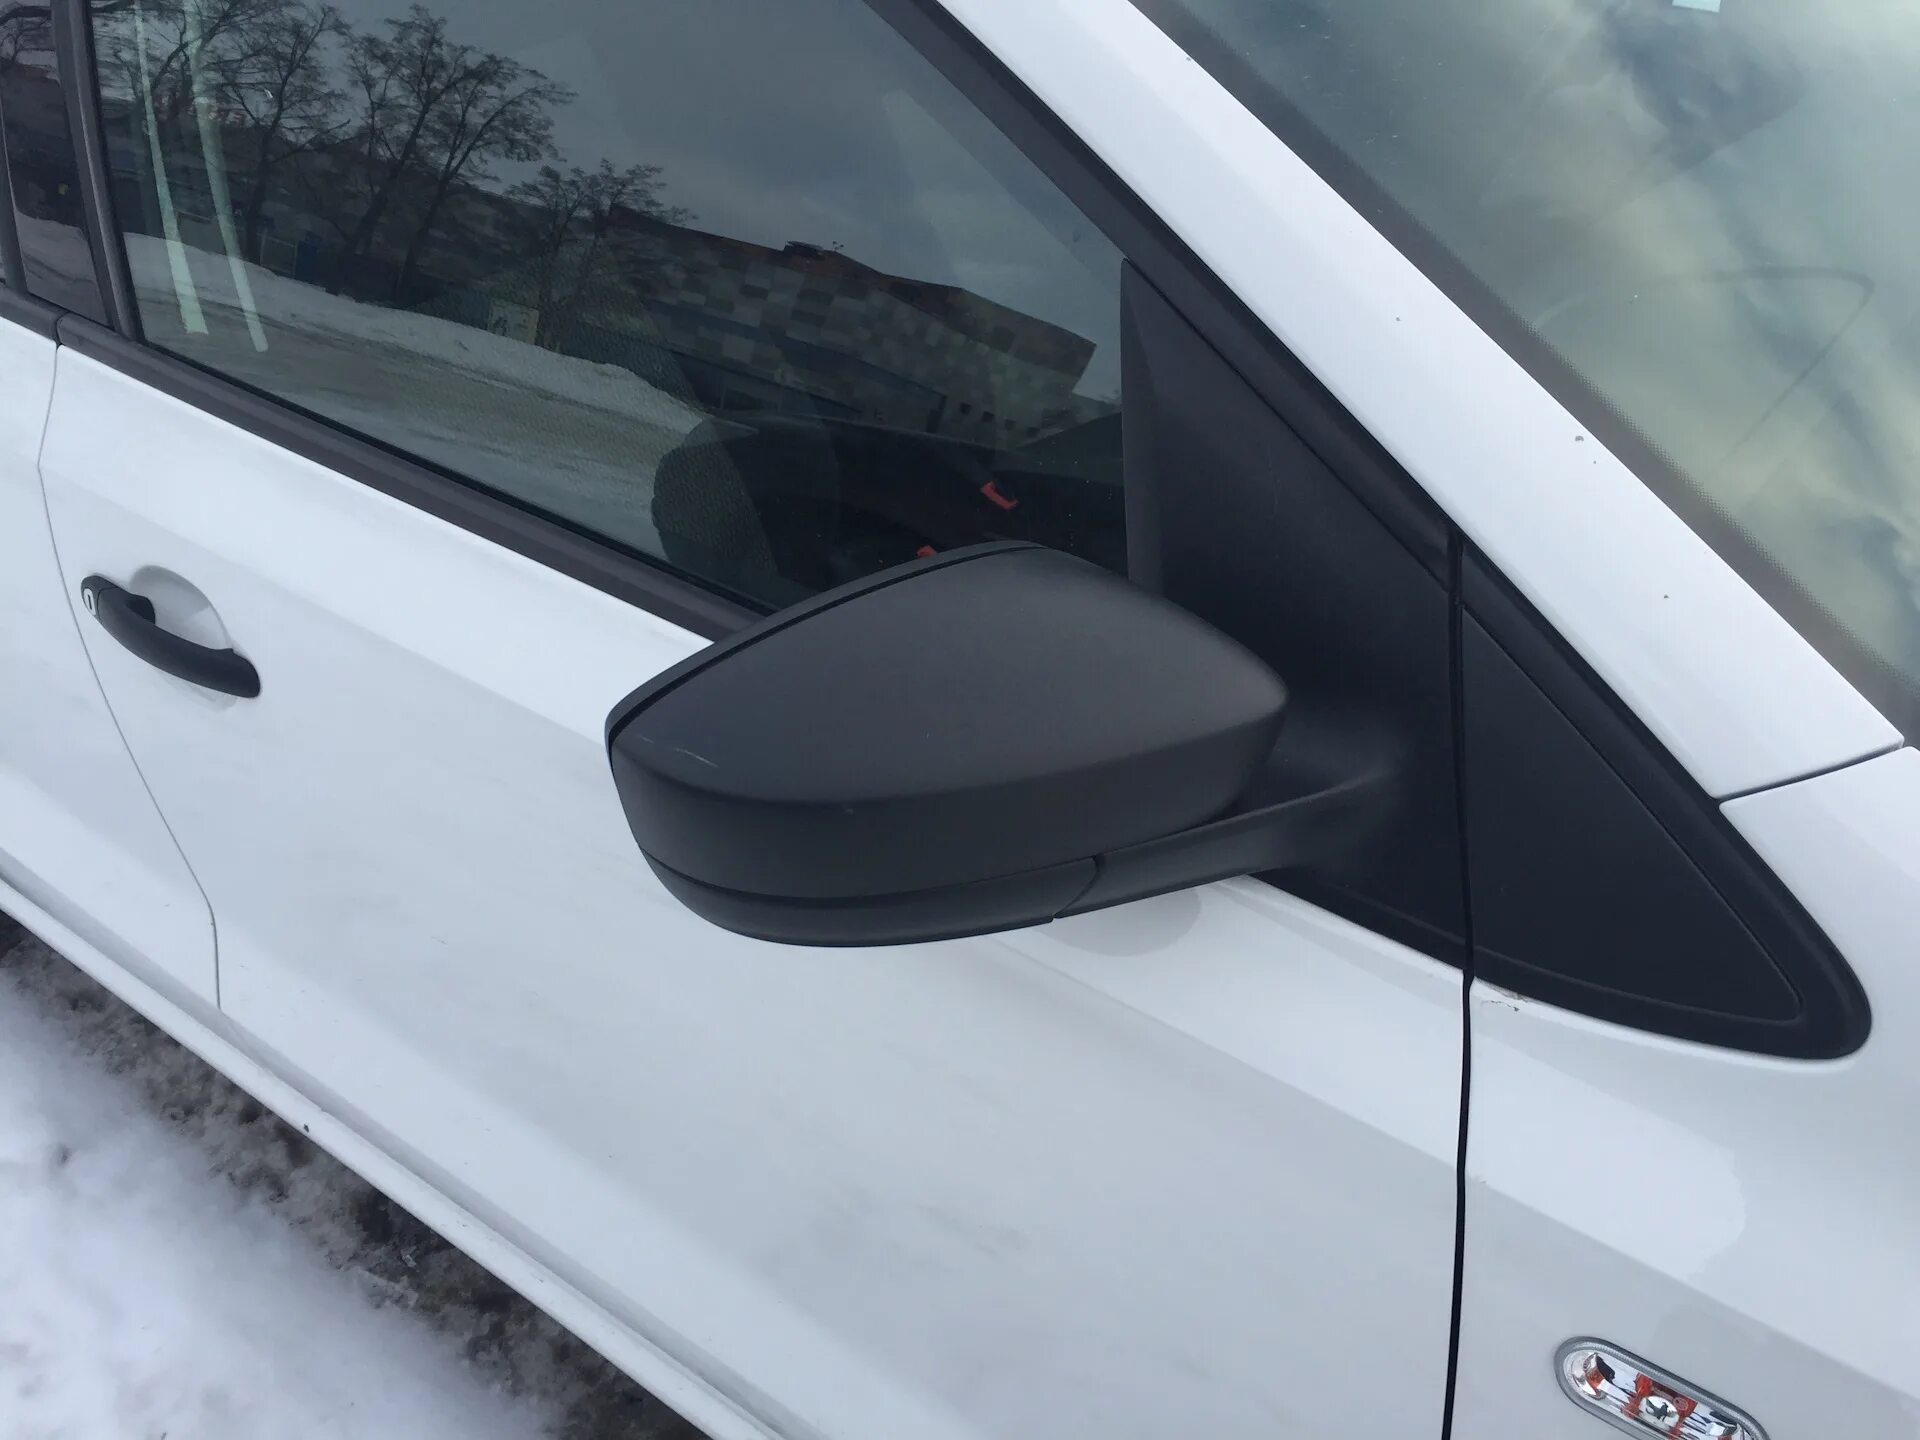 VW Polo 2013 черные зеркала. Зеркала VW Polo sedan. VW Polo sedan 2014 зеркало. Механическое зеркало Фольксваген поло седан. Volkswagen polo зеркала